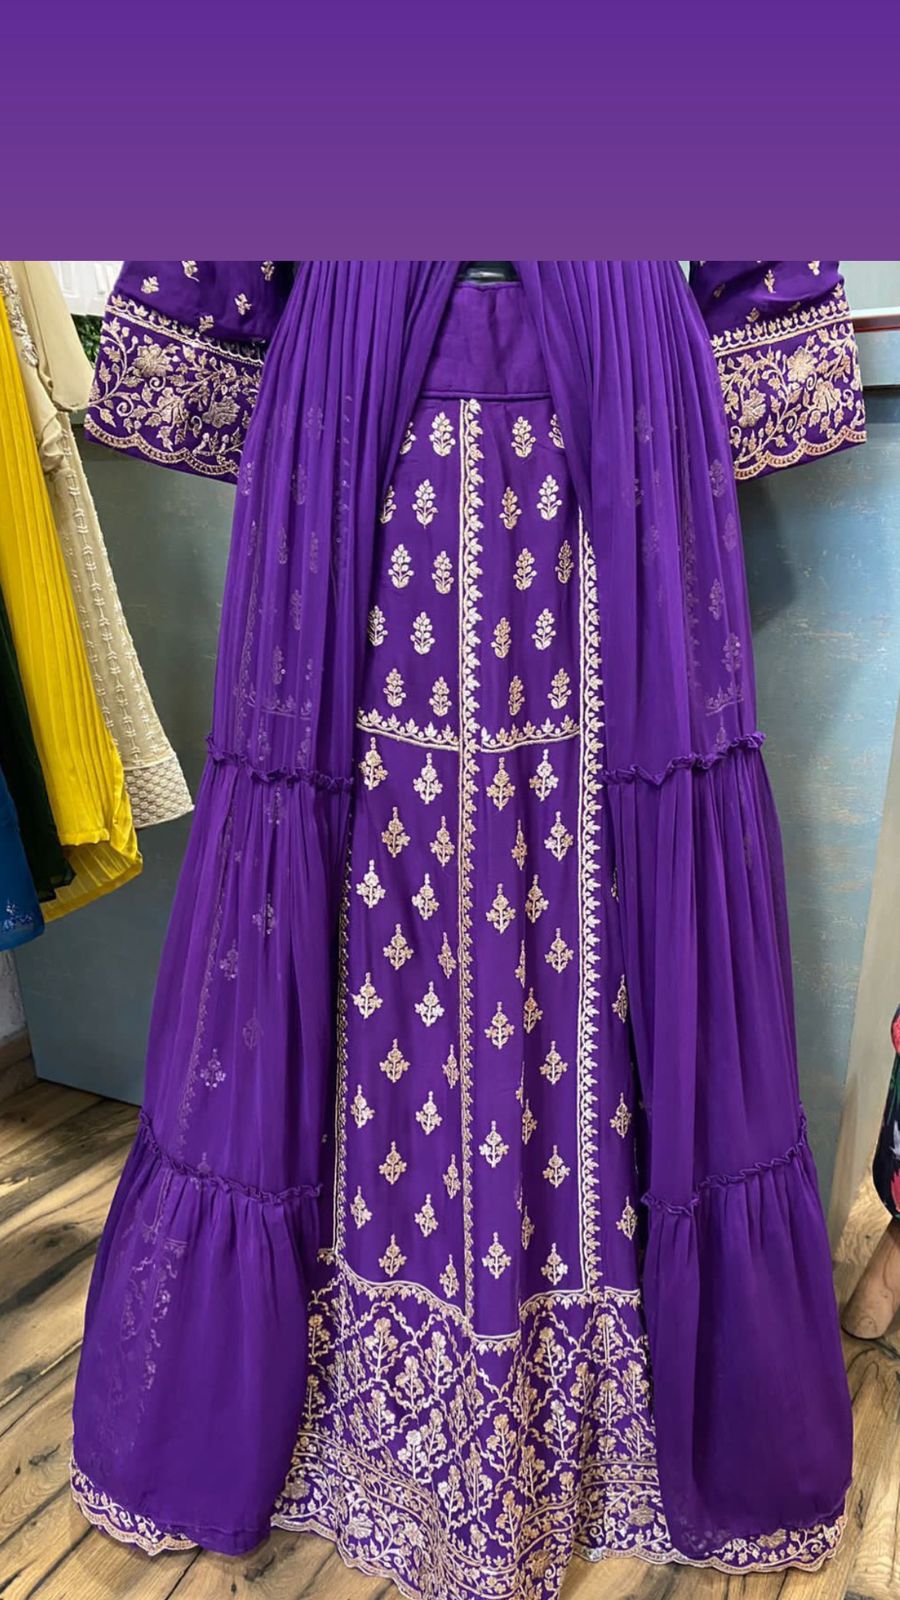 Aneena gorgette dress